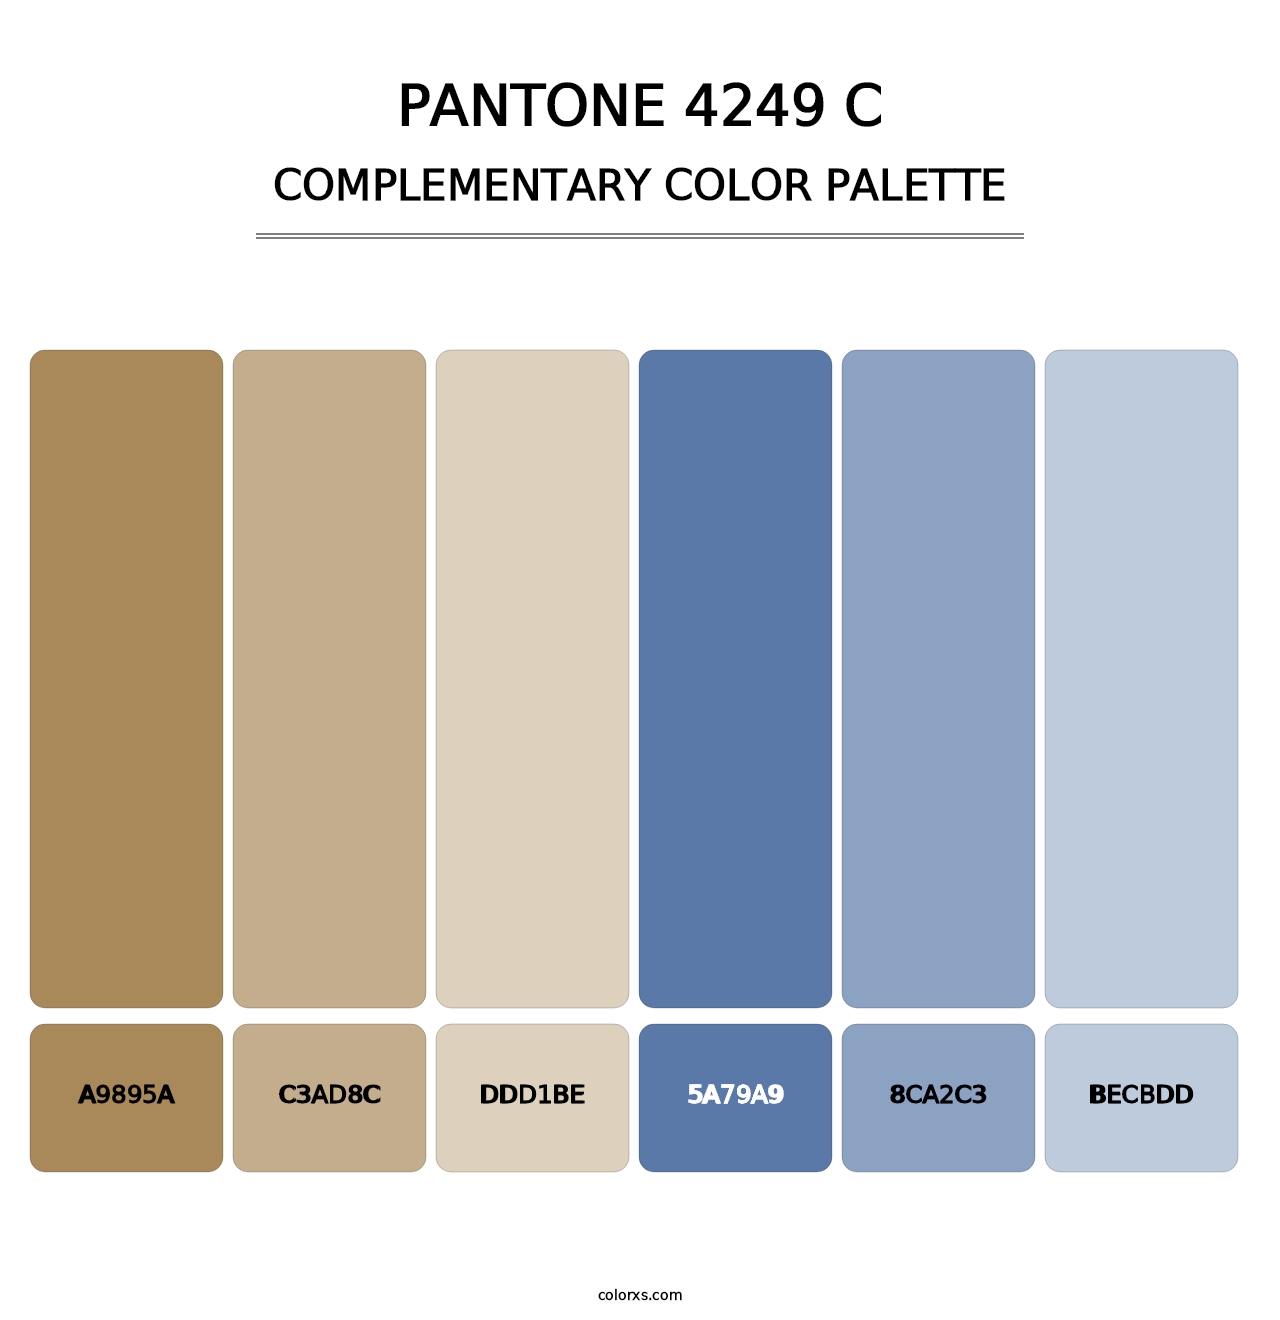 PANTONE 4249 C - Complementary Color Palette